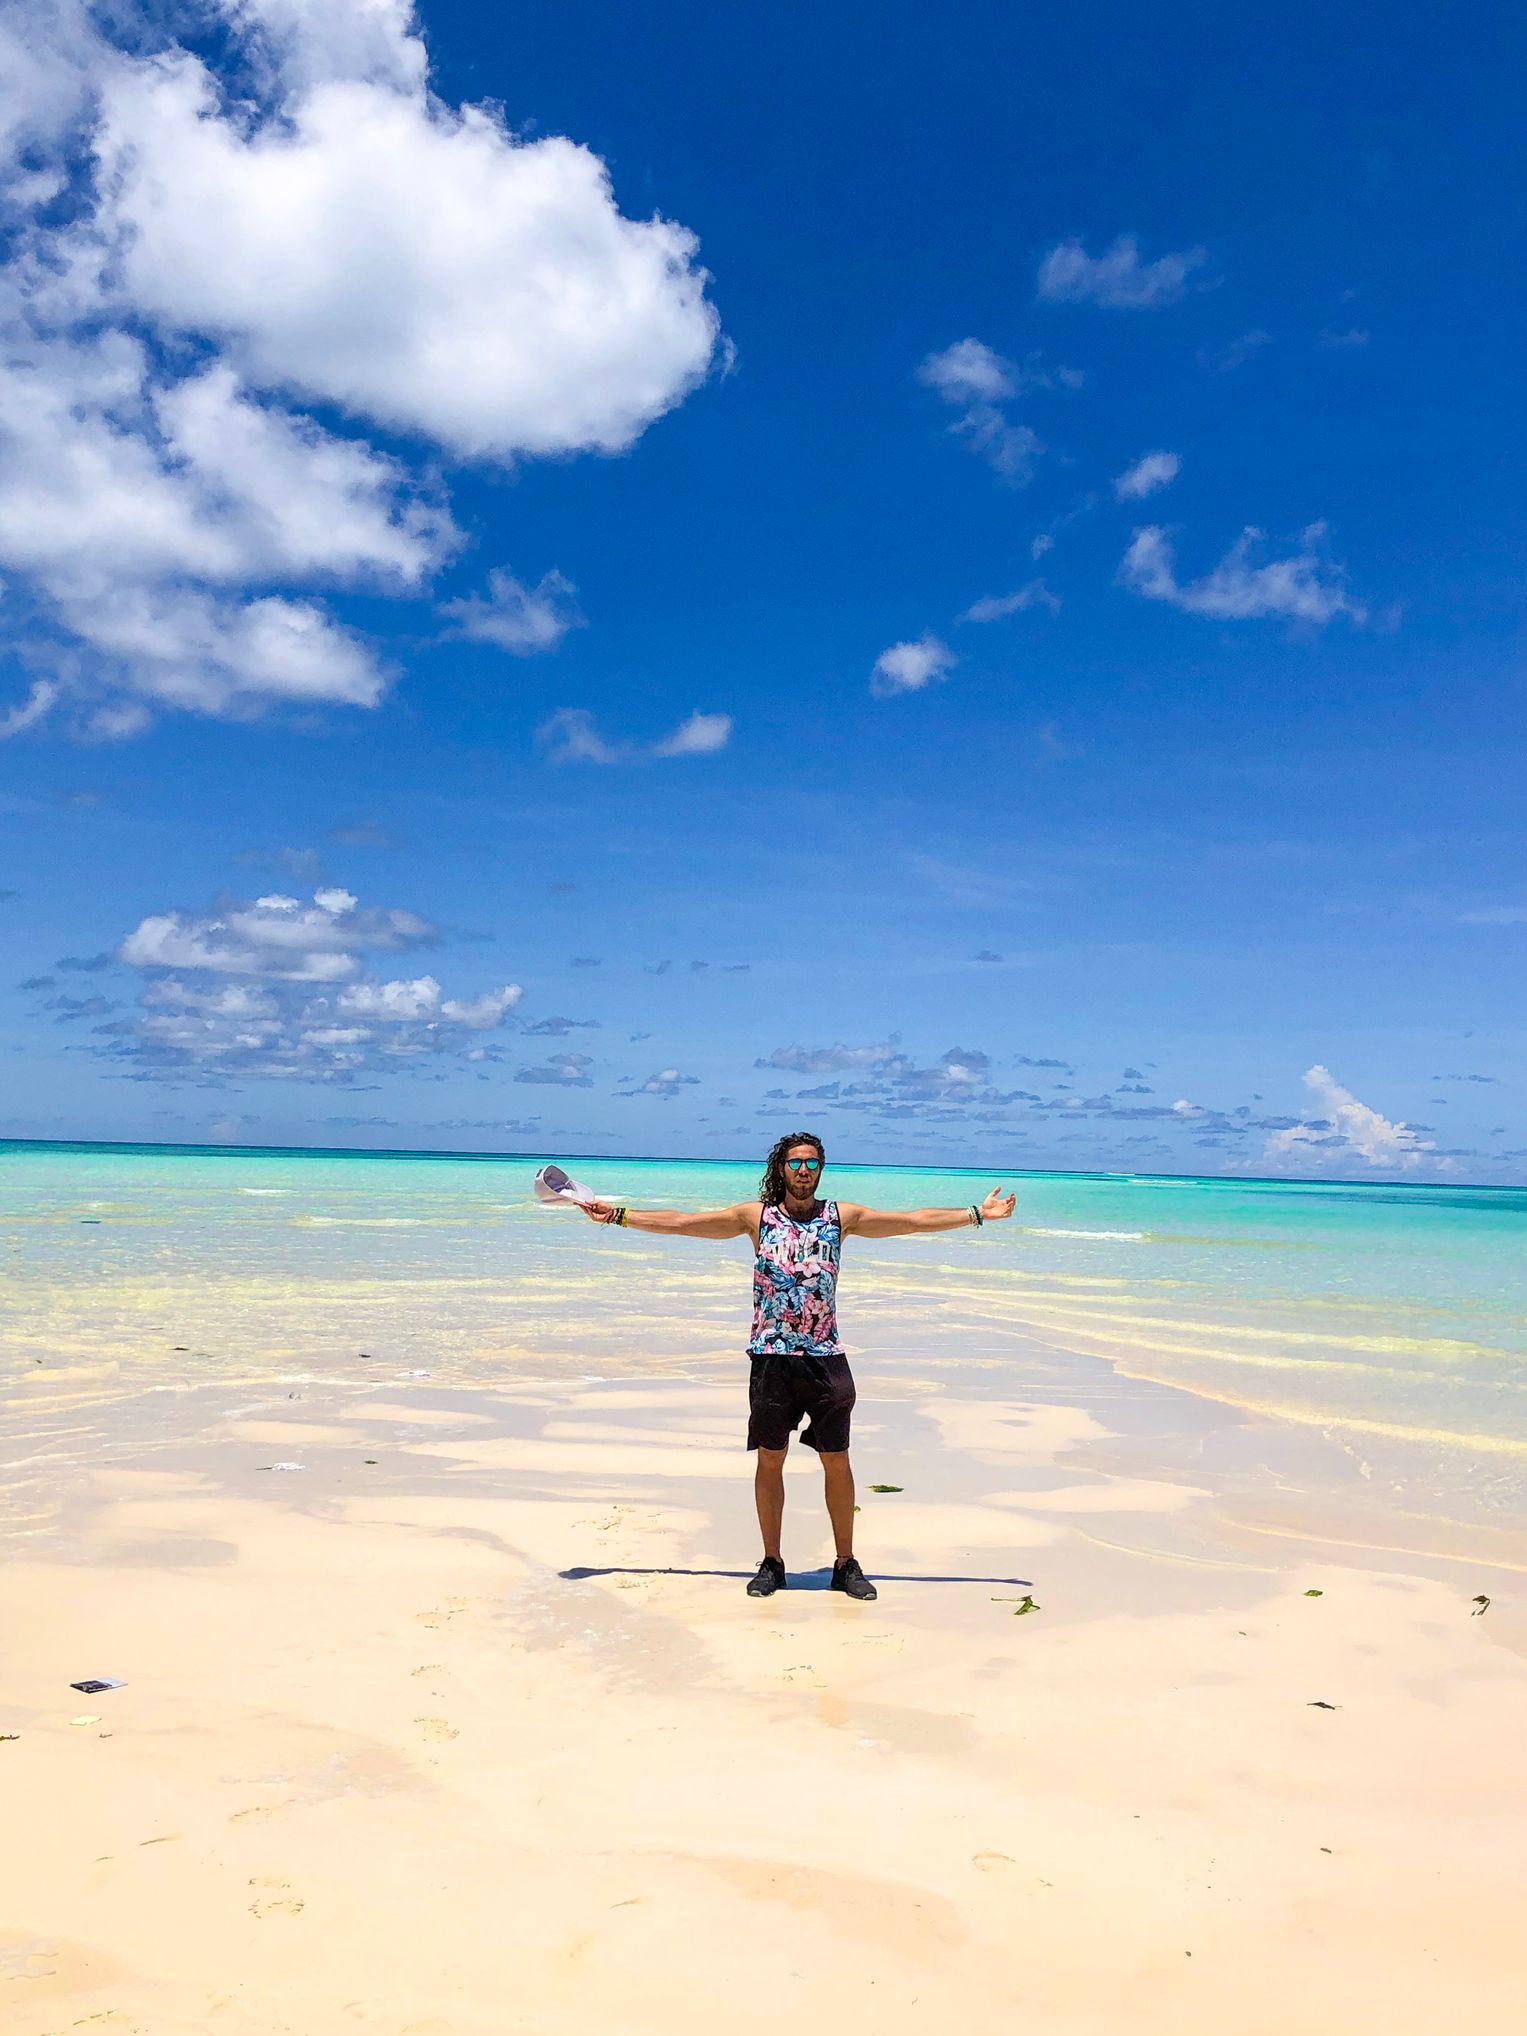 me at a beach in Tarawa, Kiribati